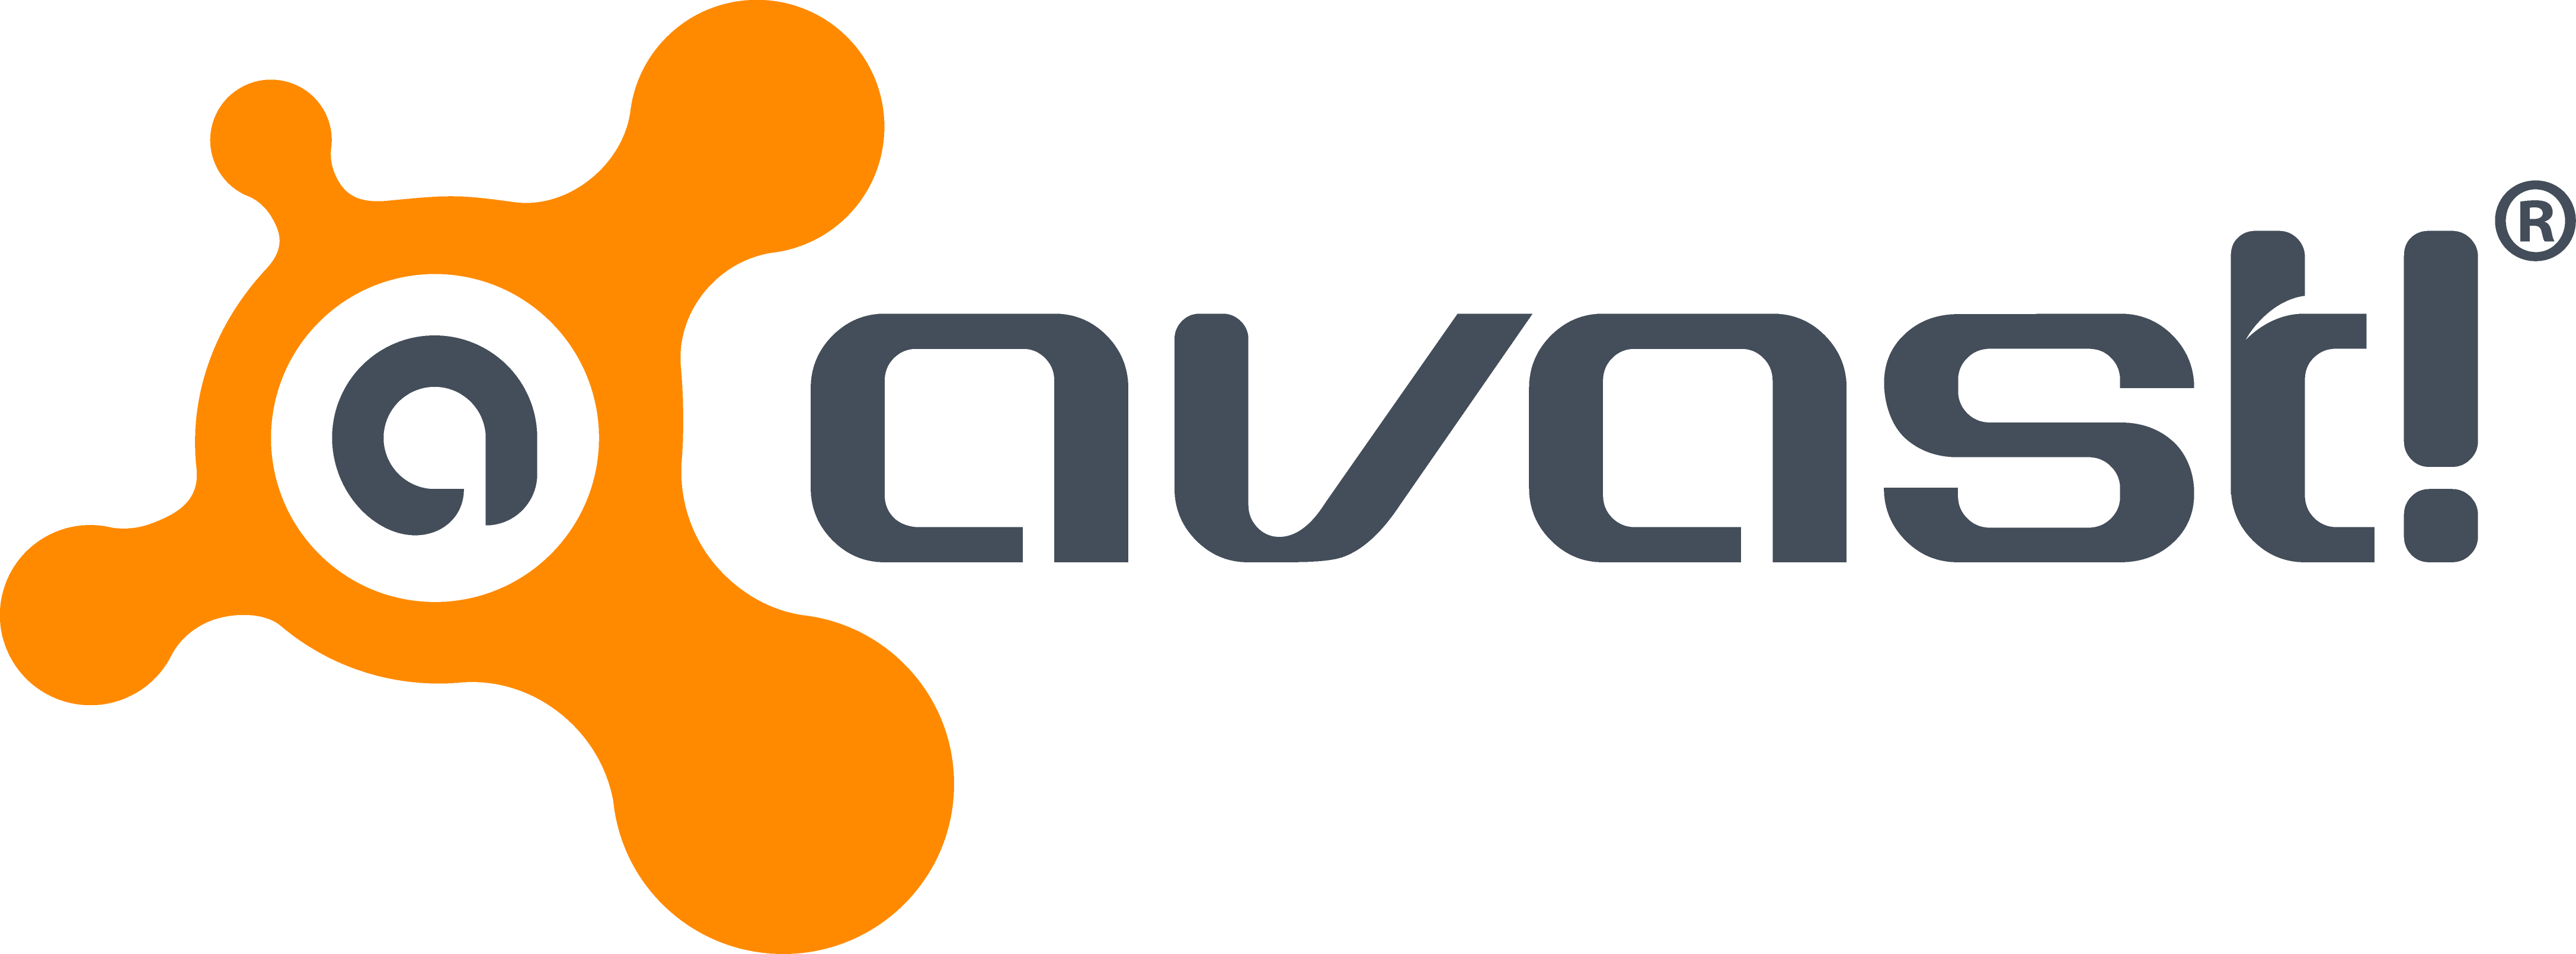 Avast Logo - Avast Logo. Open Identity & Organization Management